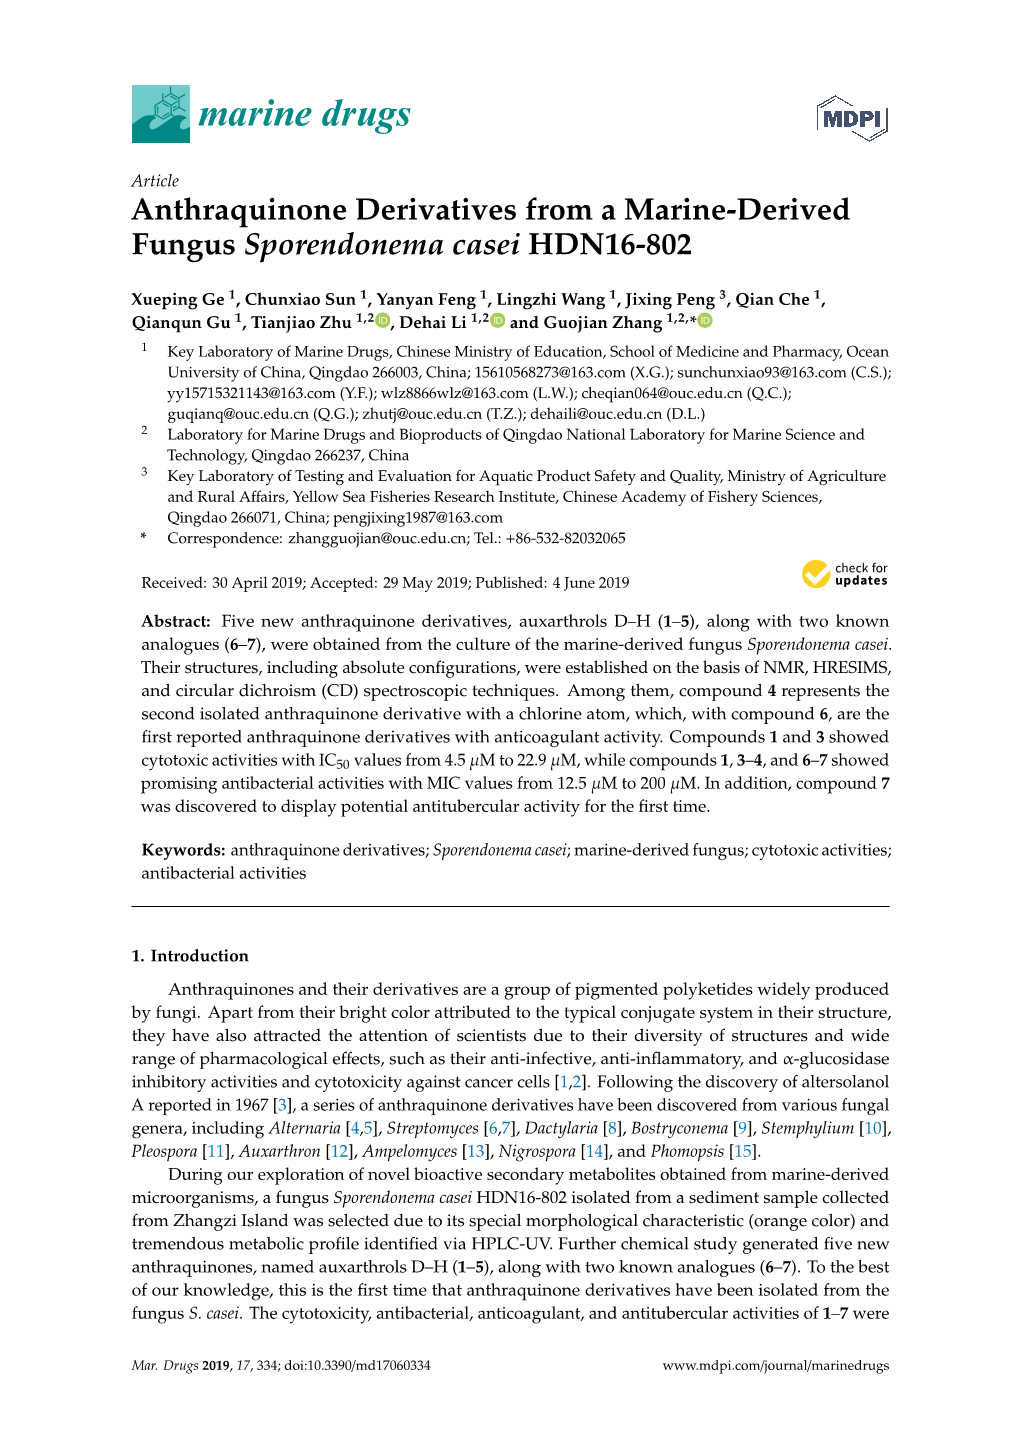 Anthraquinone Derivatives from a Marine-Derived Fungus Sporendonema Casei HDN16-802